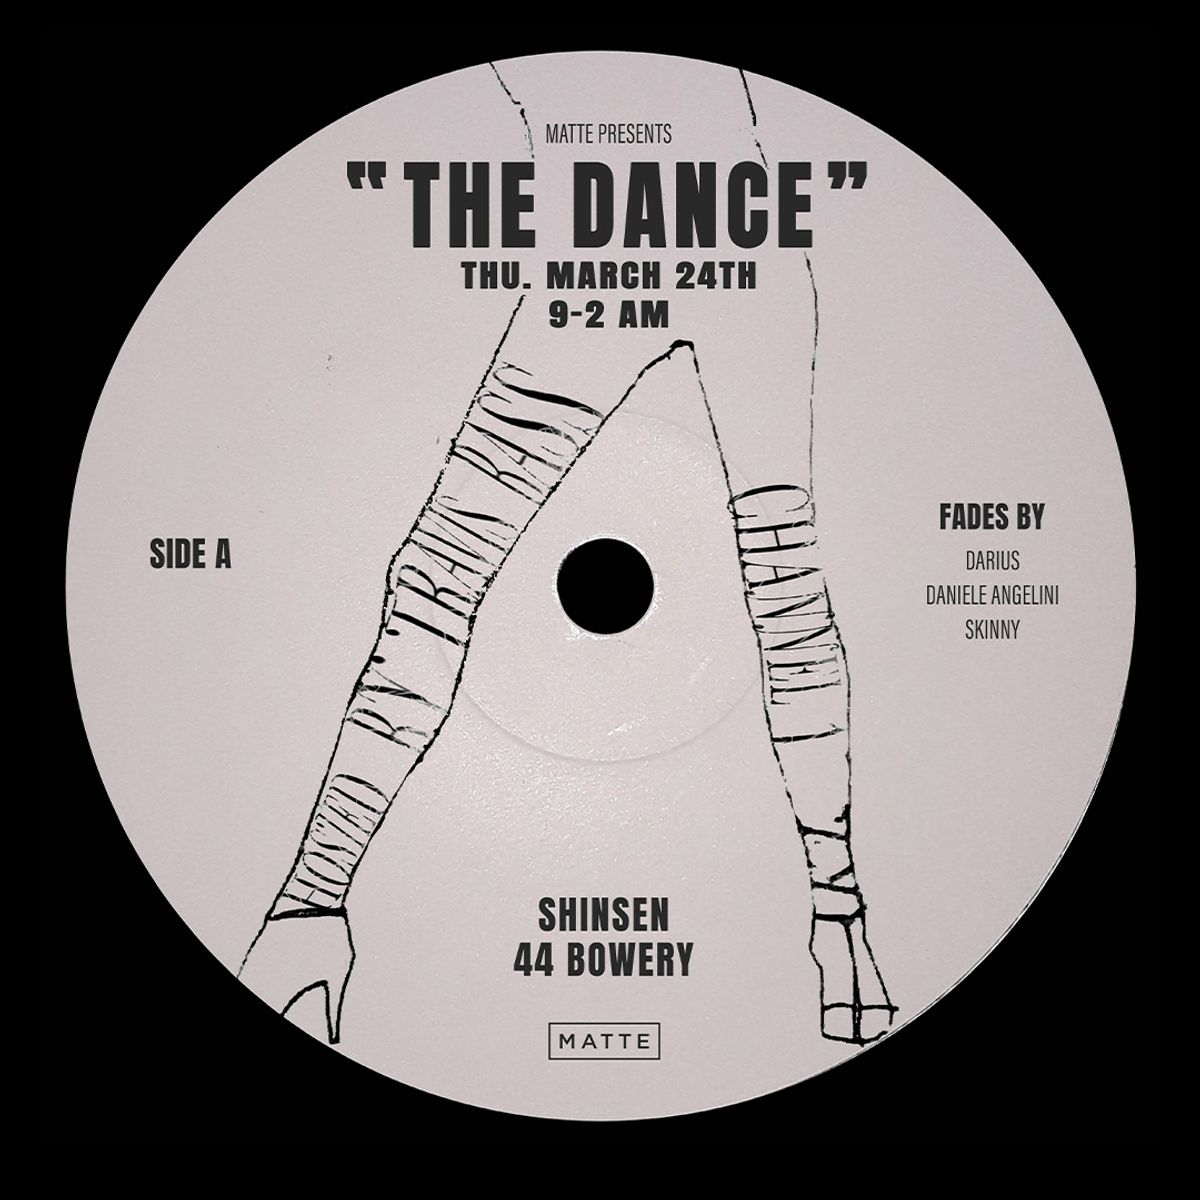 The Dance Vol. 1